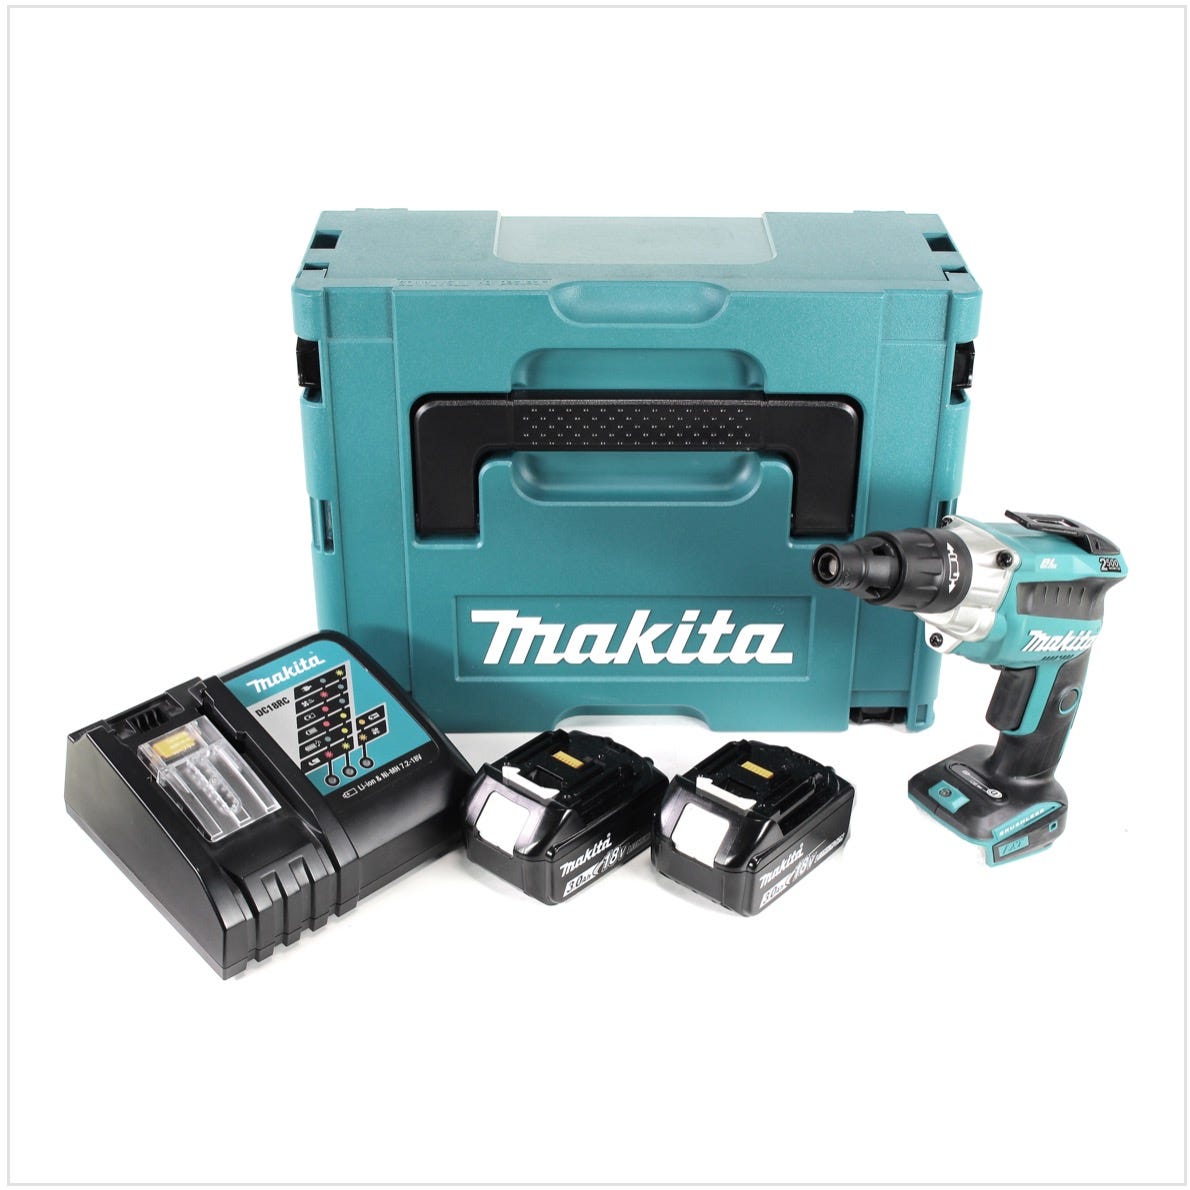 Makita DFS 251 RFJ 18 V Li-Ion Visseuses bardage Brushless + Coffret Makpac + 2x Batteries BL1830 3,0 Ah + Chargeur DC18RC 0